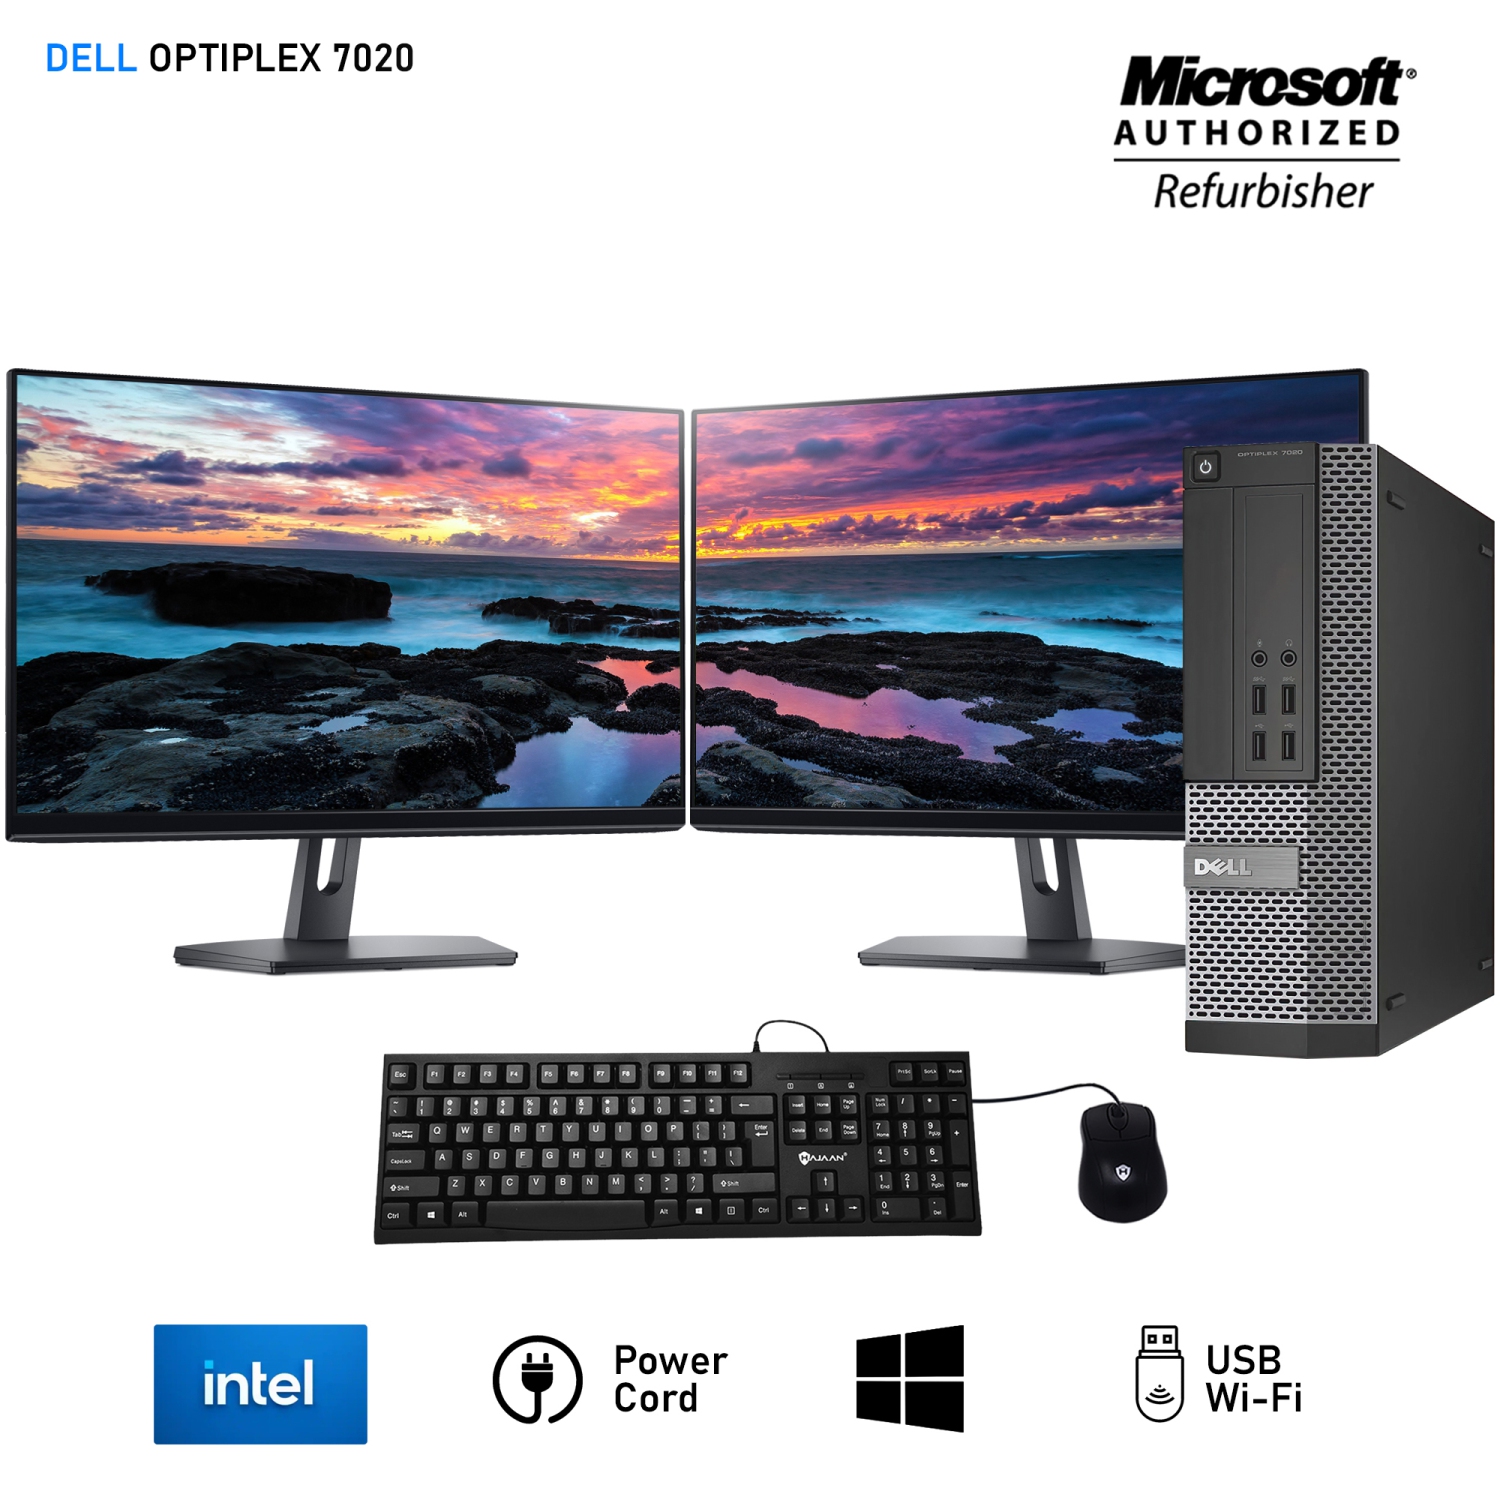 Refurbished (Good) - Dell OptiPlex 7020 SFF Desktop PC with Dual (2) New 20" Inch HDMI Monitor - WEBCAM - Intel Core i7-4770 3.40 GHz 16GB RAM NEW 512GB SSD Windows 10 Pro WiFi